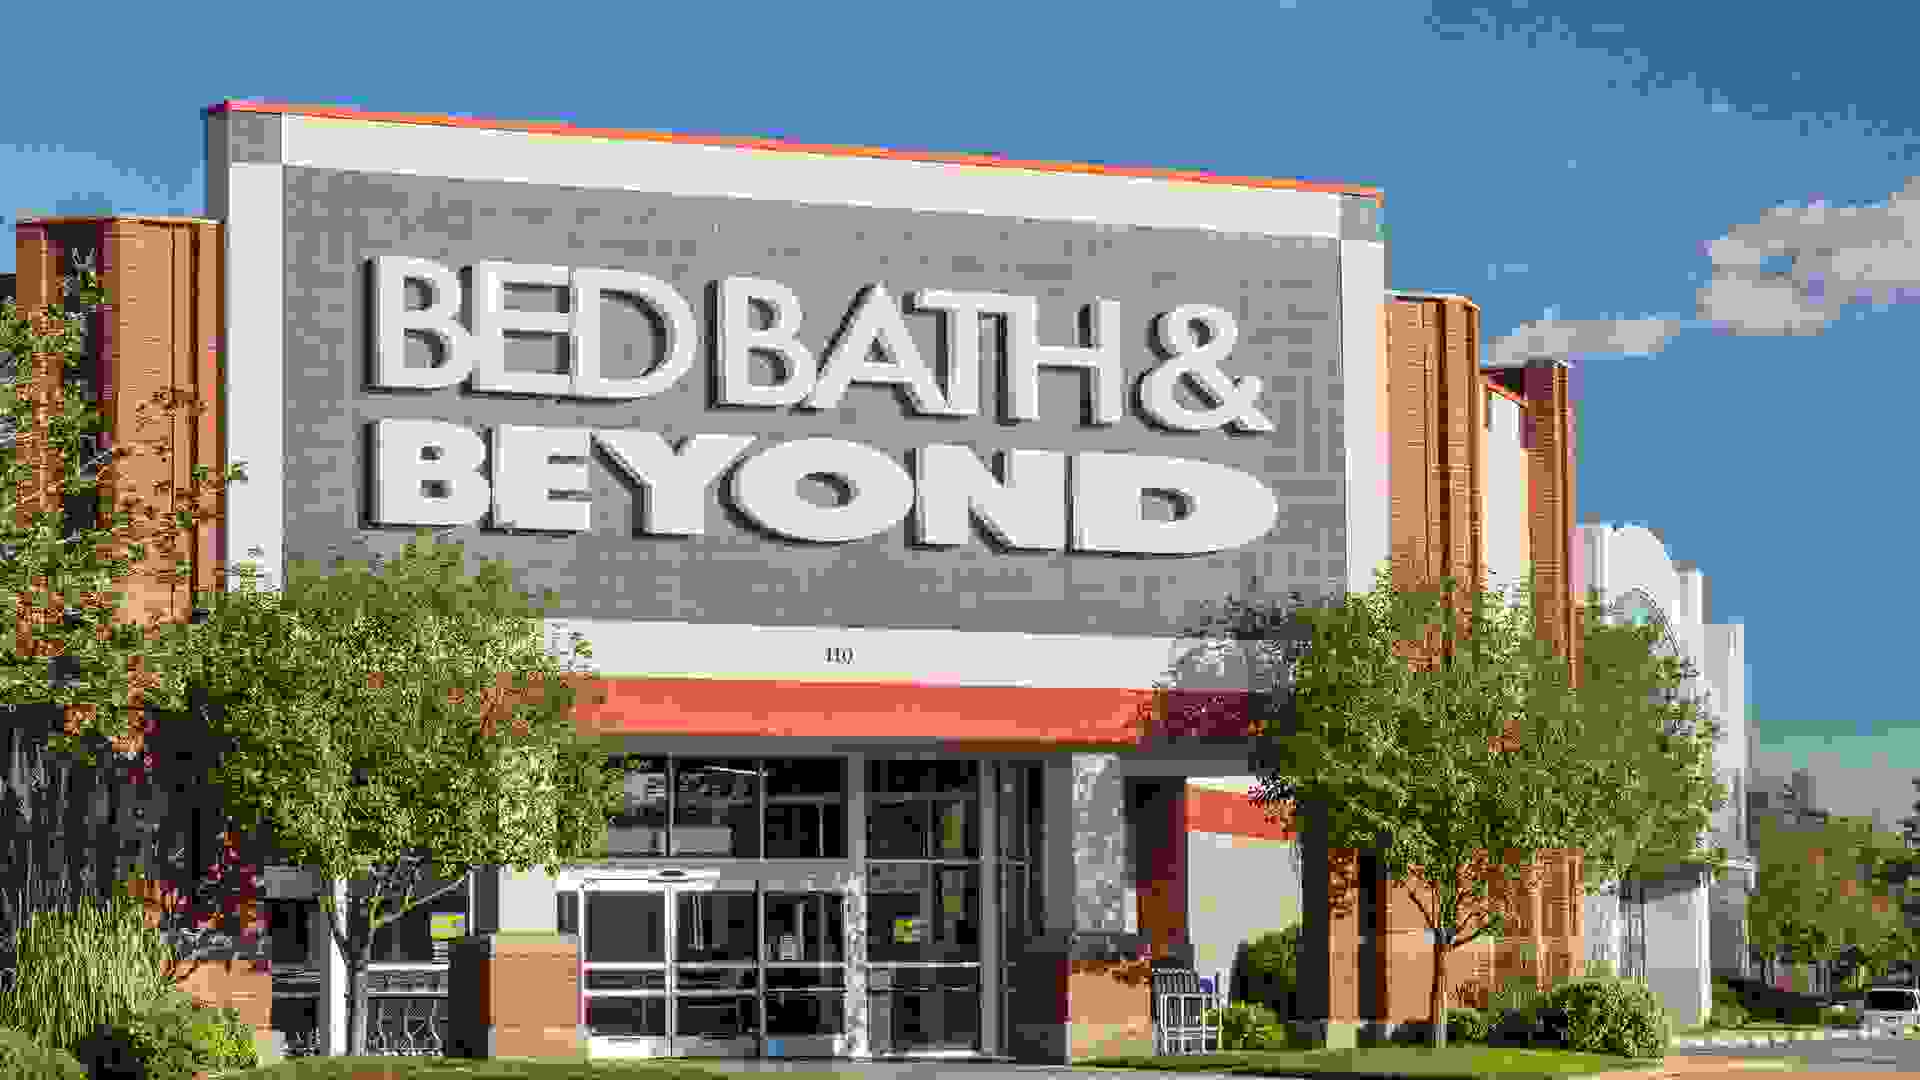 Fort Collins, CO, USA - September 16, 2014: Bed Bath & Beyond Inc.